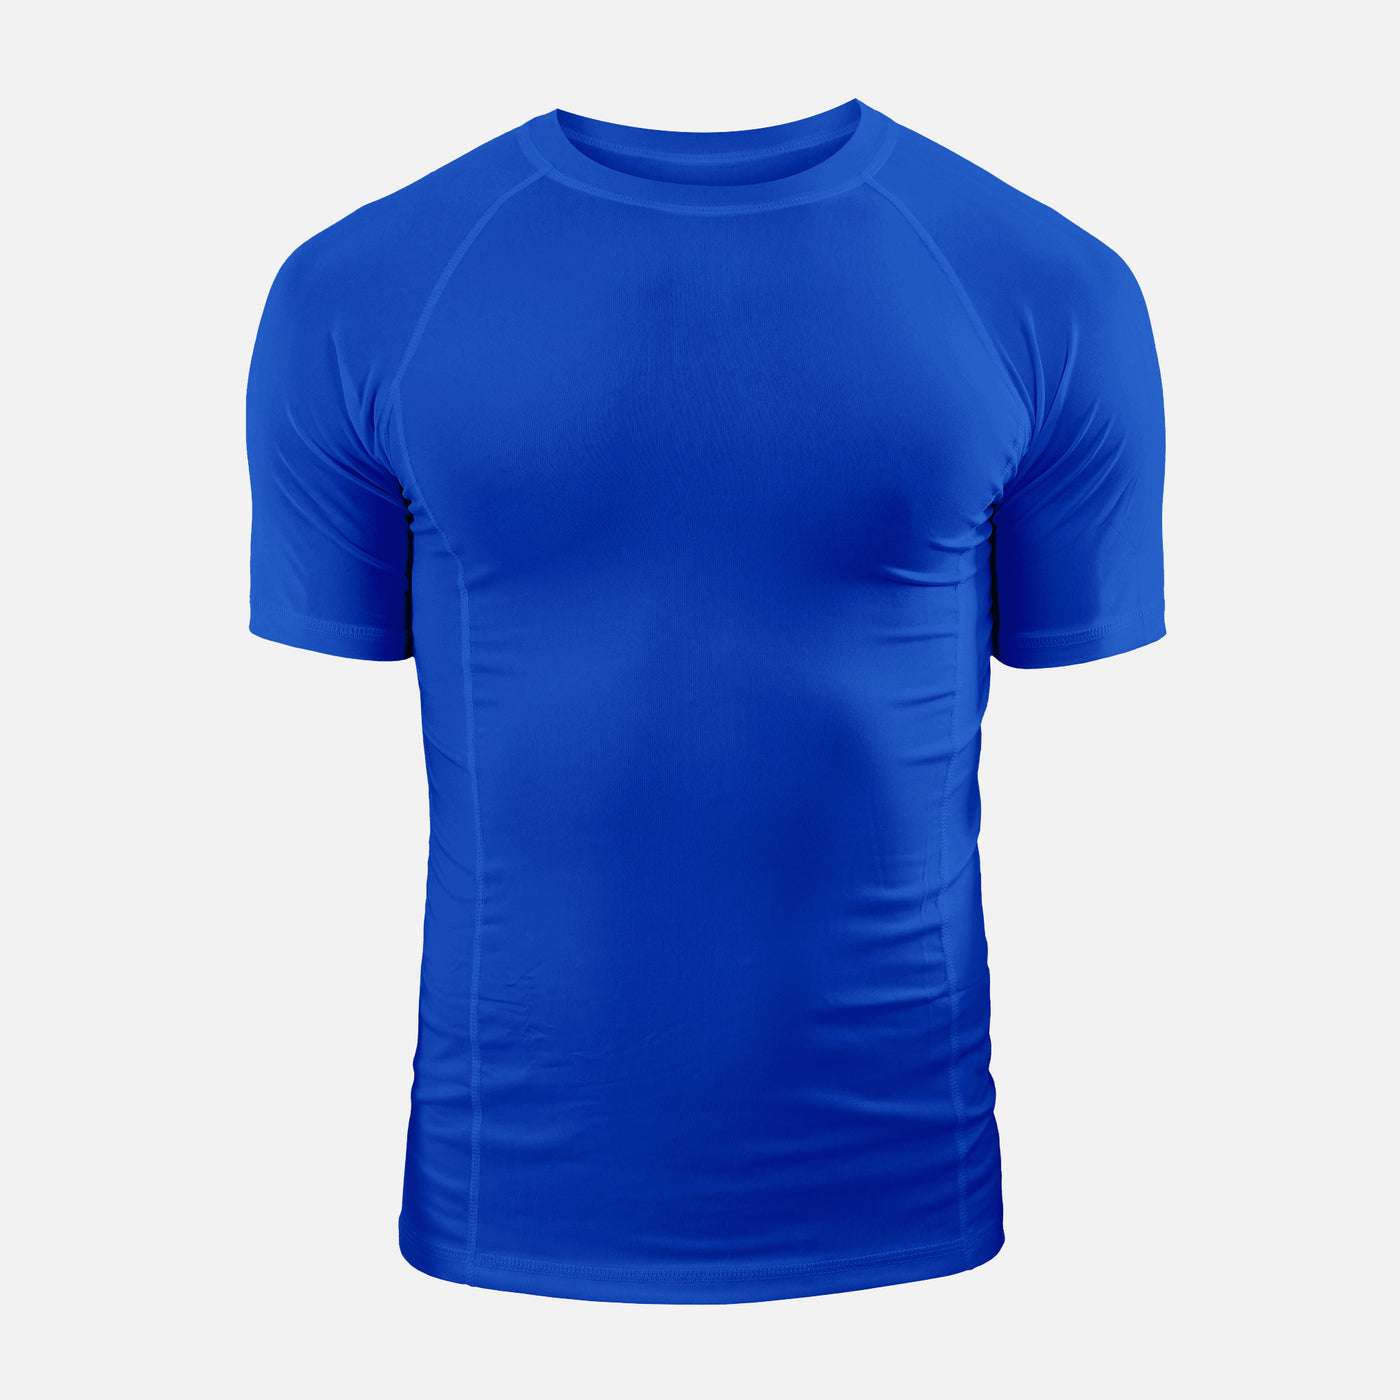 Cobalt Blue Compression Shirt